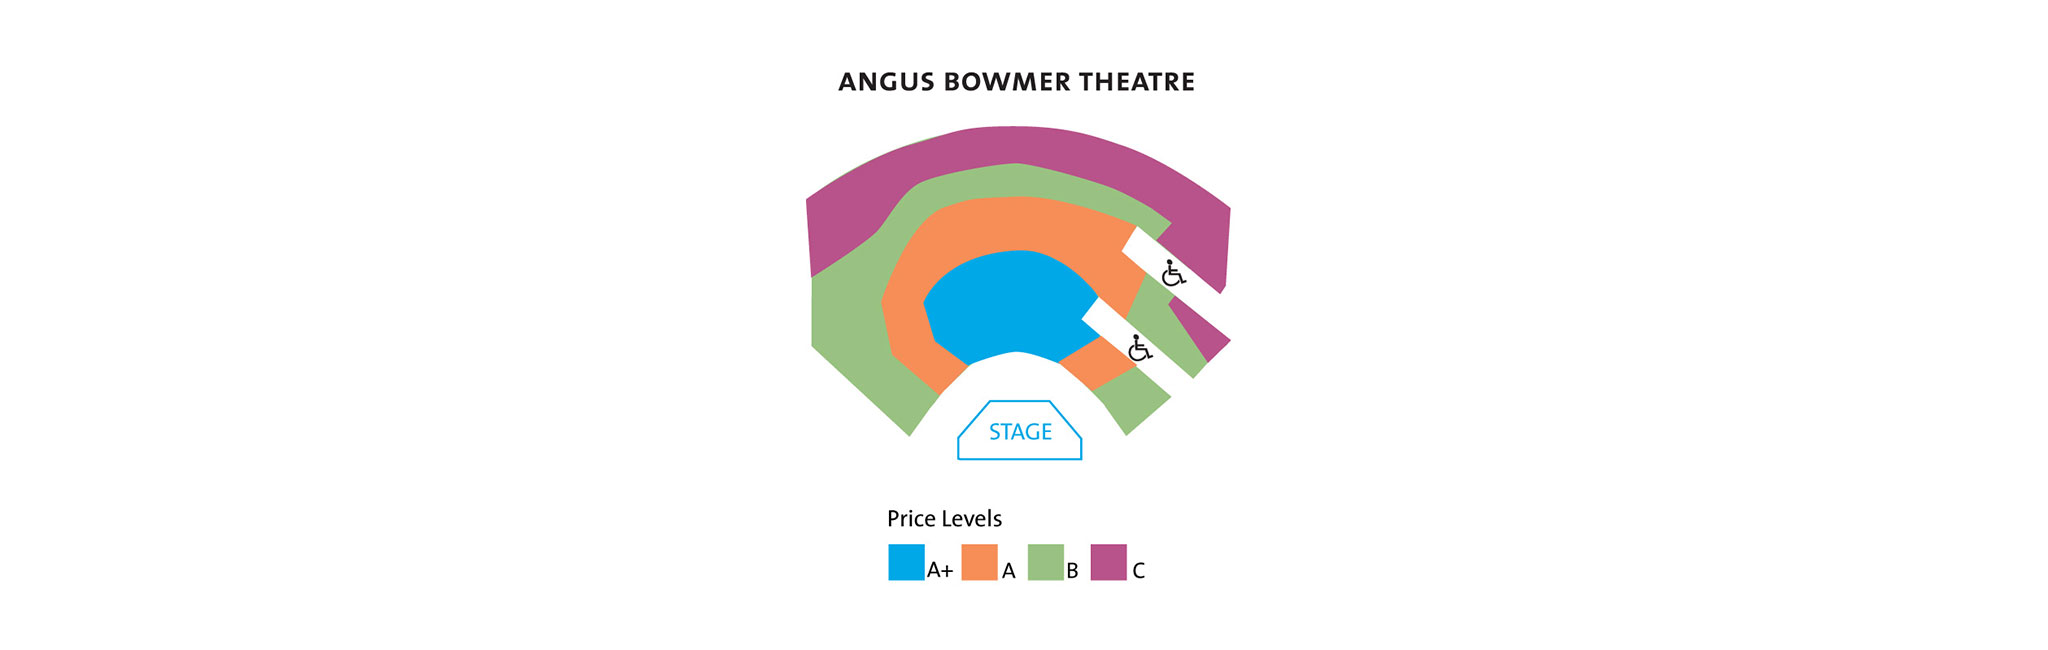 Angus Bowmer Theatre seating chart.